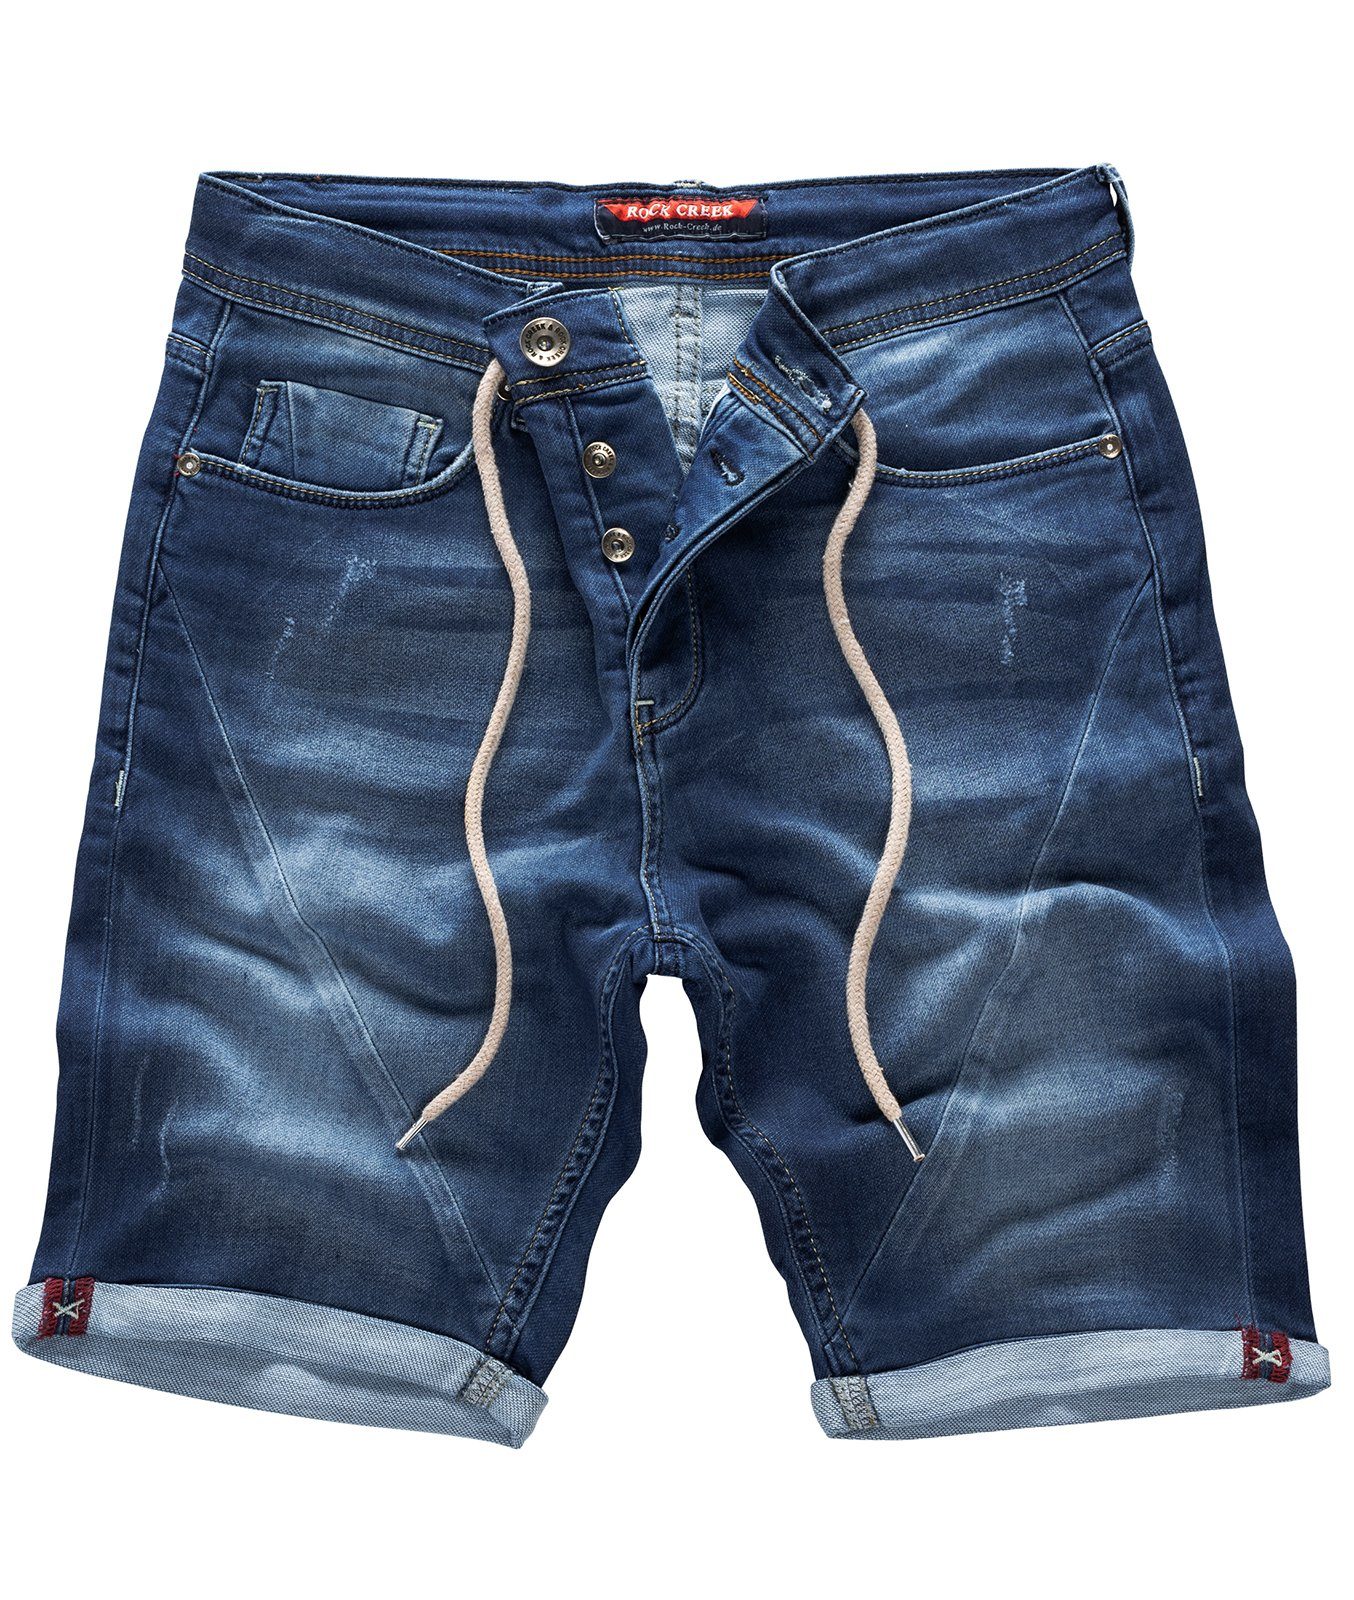 Herren Jeans Shorts Jeansshorts Creek Rock Sweat Shorts RC-2200 Navy